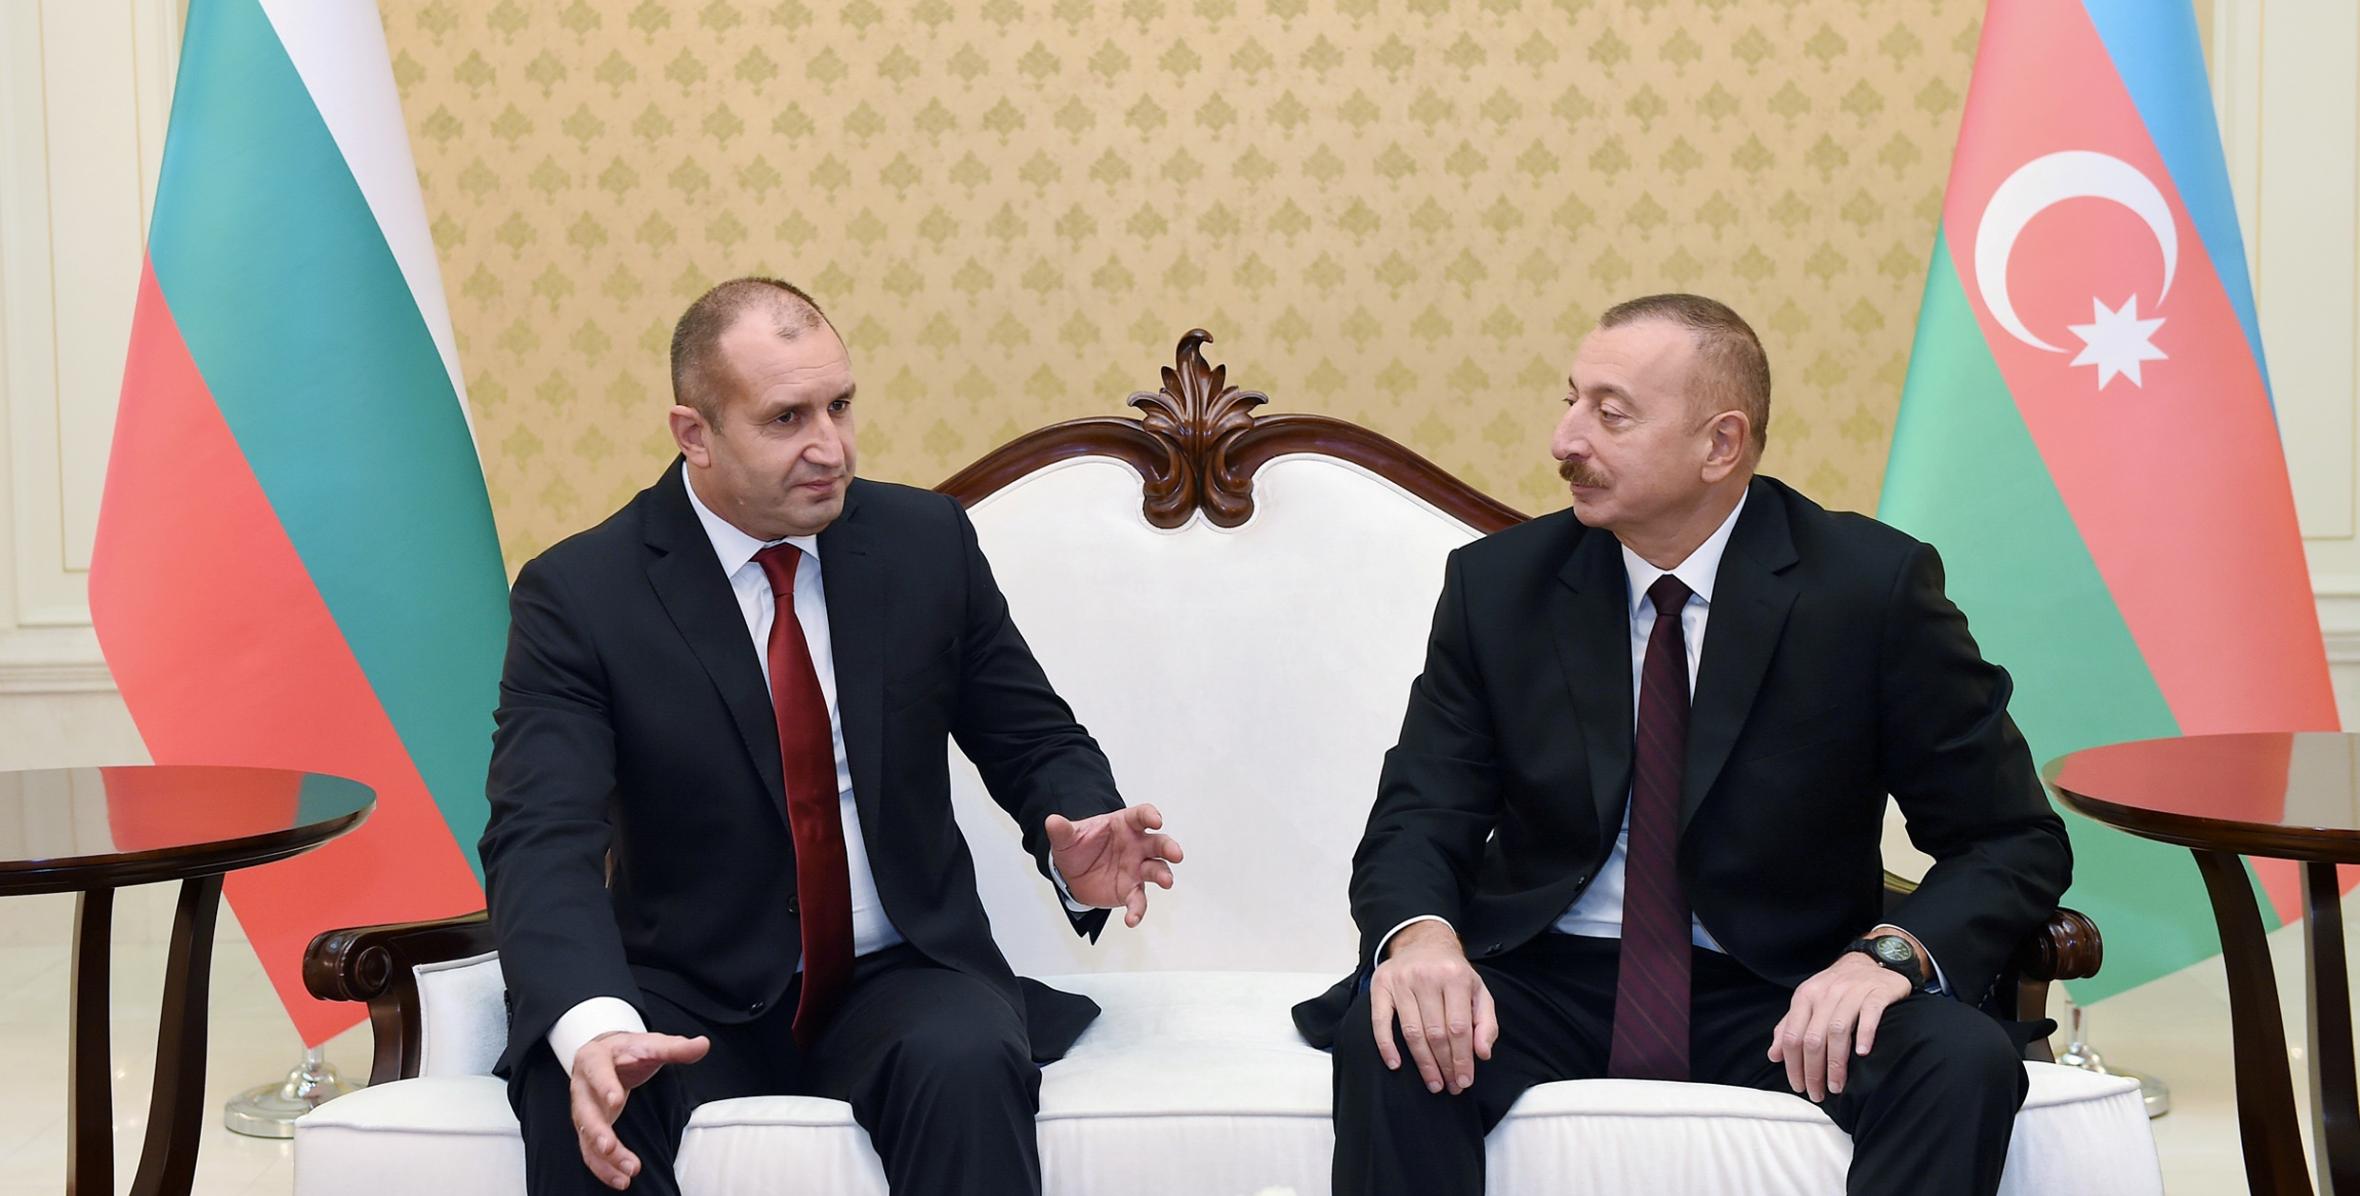 Ilham Aliyev, first lady Mehriban Aliyeva met with Bulgarian President Rumen Radev and his wife Desislava Radeva